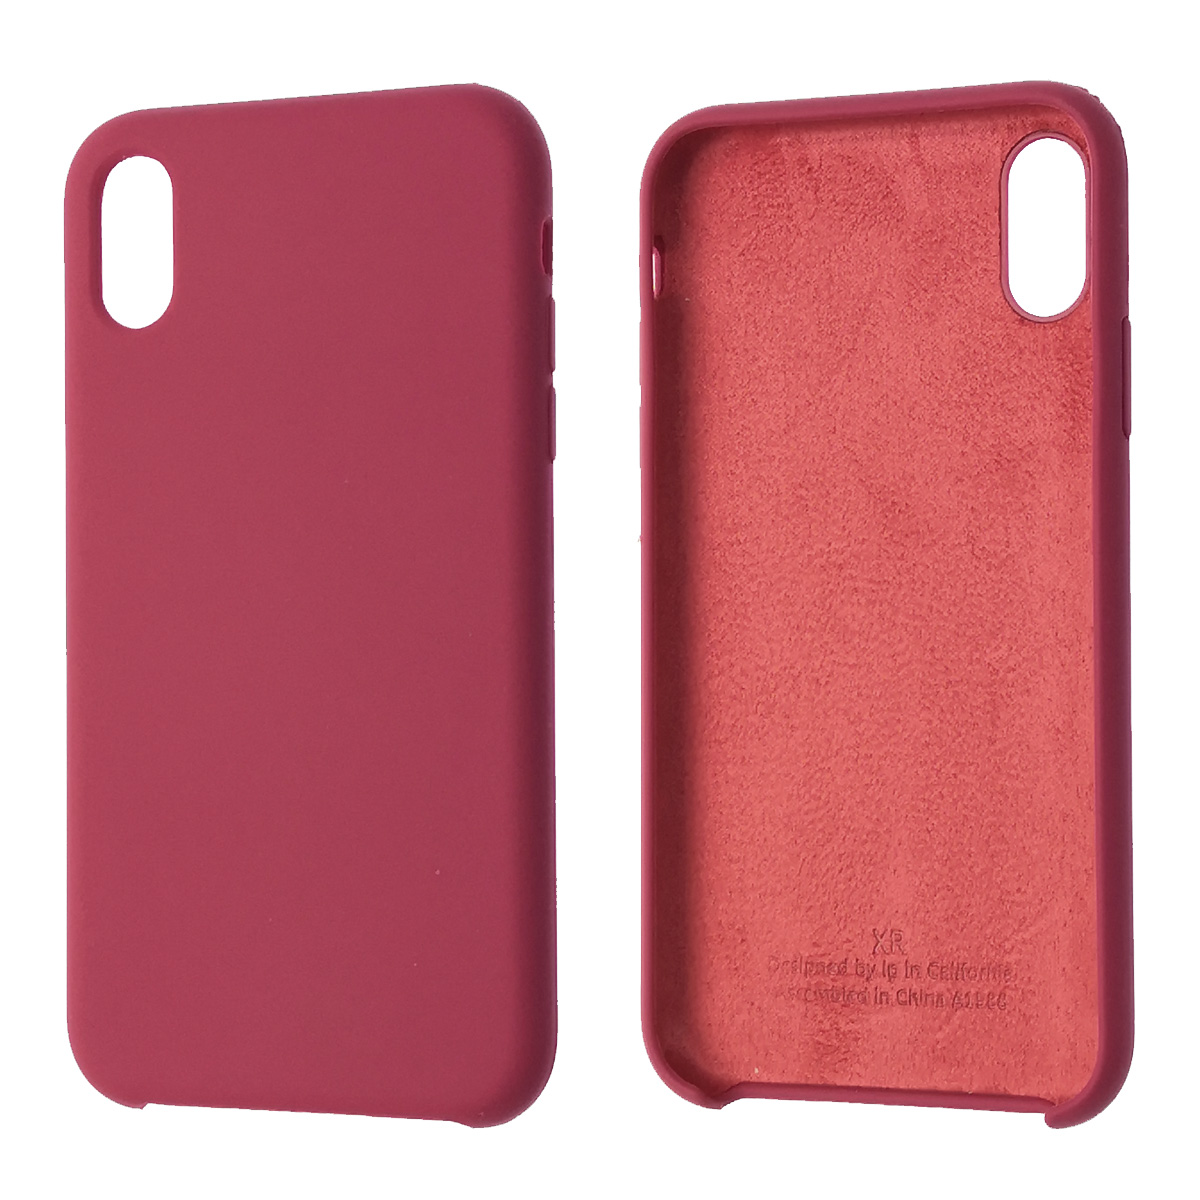 Чехол накладка Silicon Case для APPLE iPhone XR, силикон, бархат, цвет малиновый